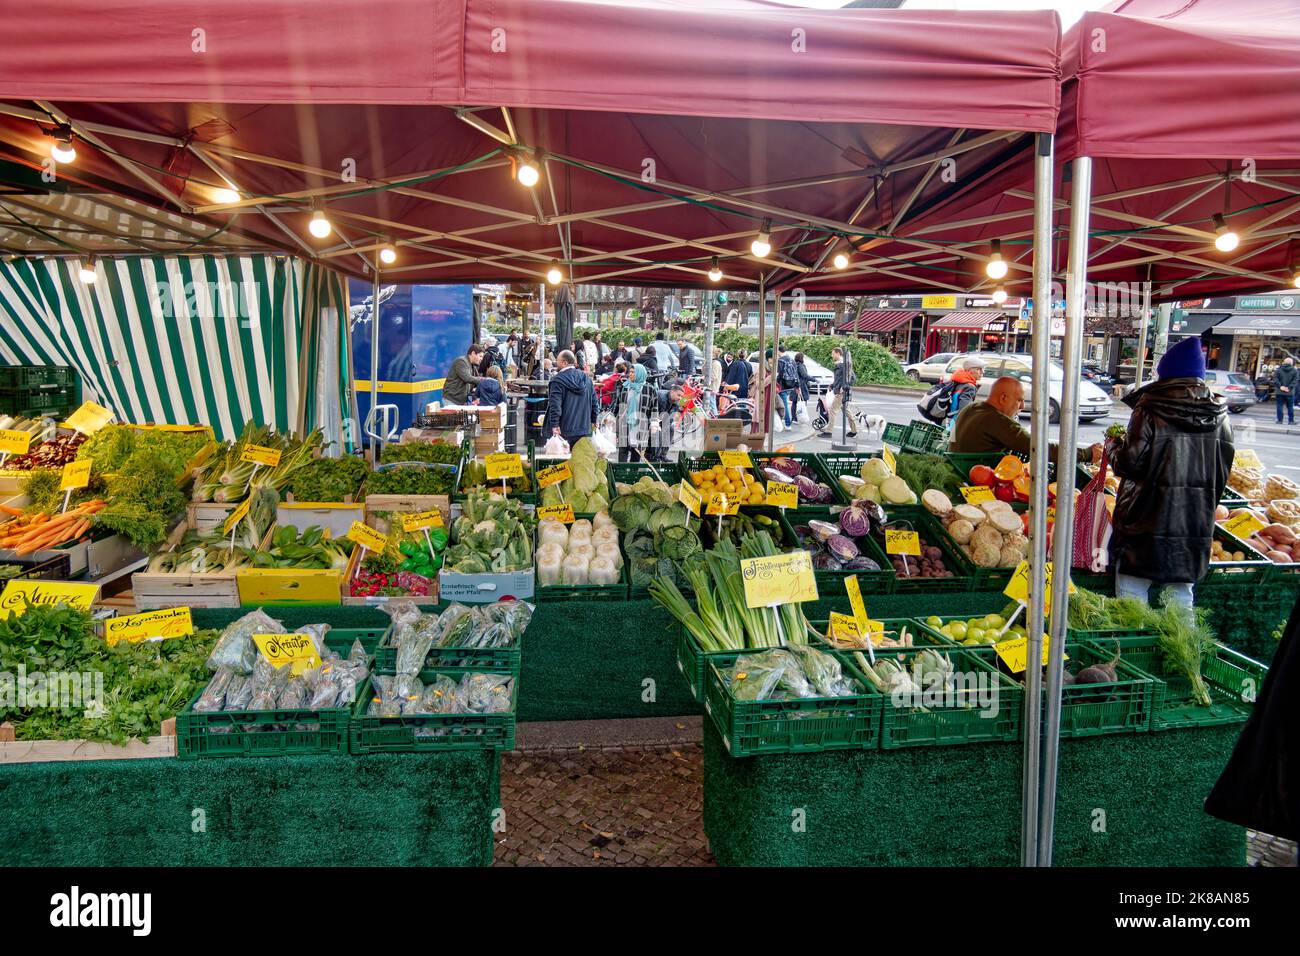 Markt am Maybachufer, Obst und Gemüse, Marktstände, Berlin-Neukölln Foto Stock